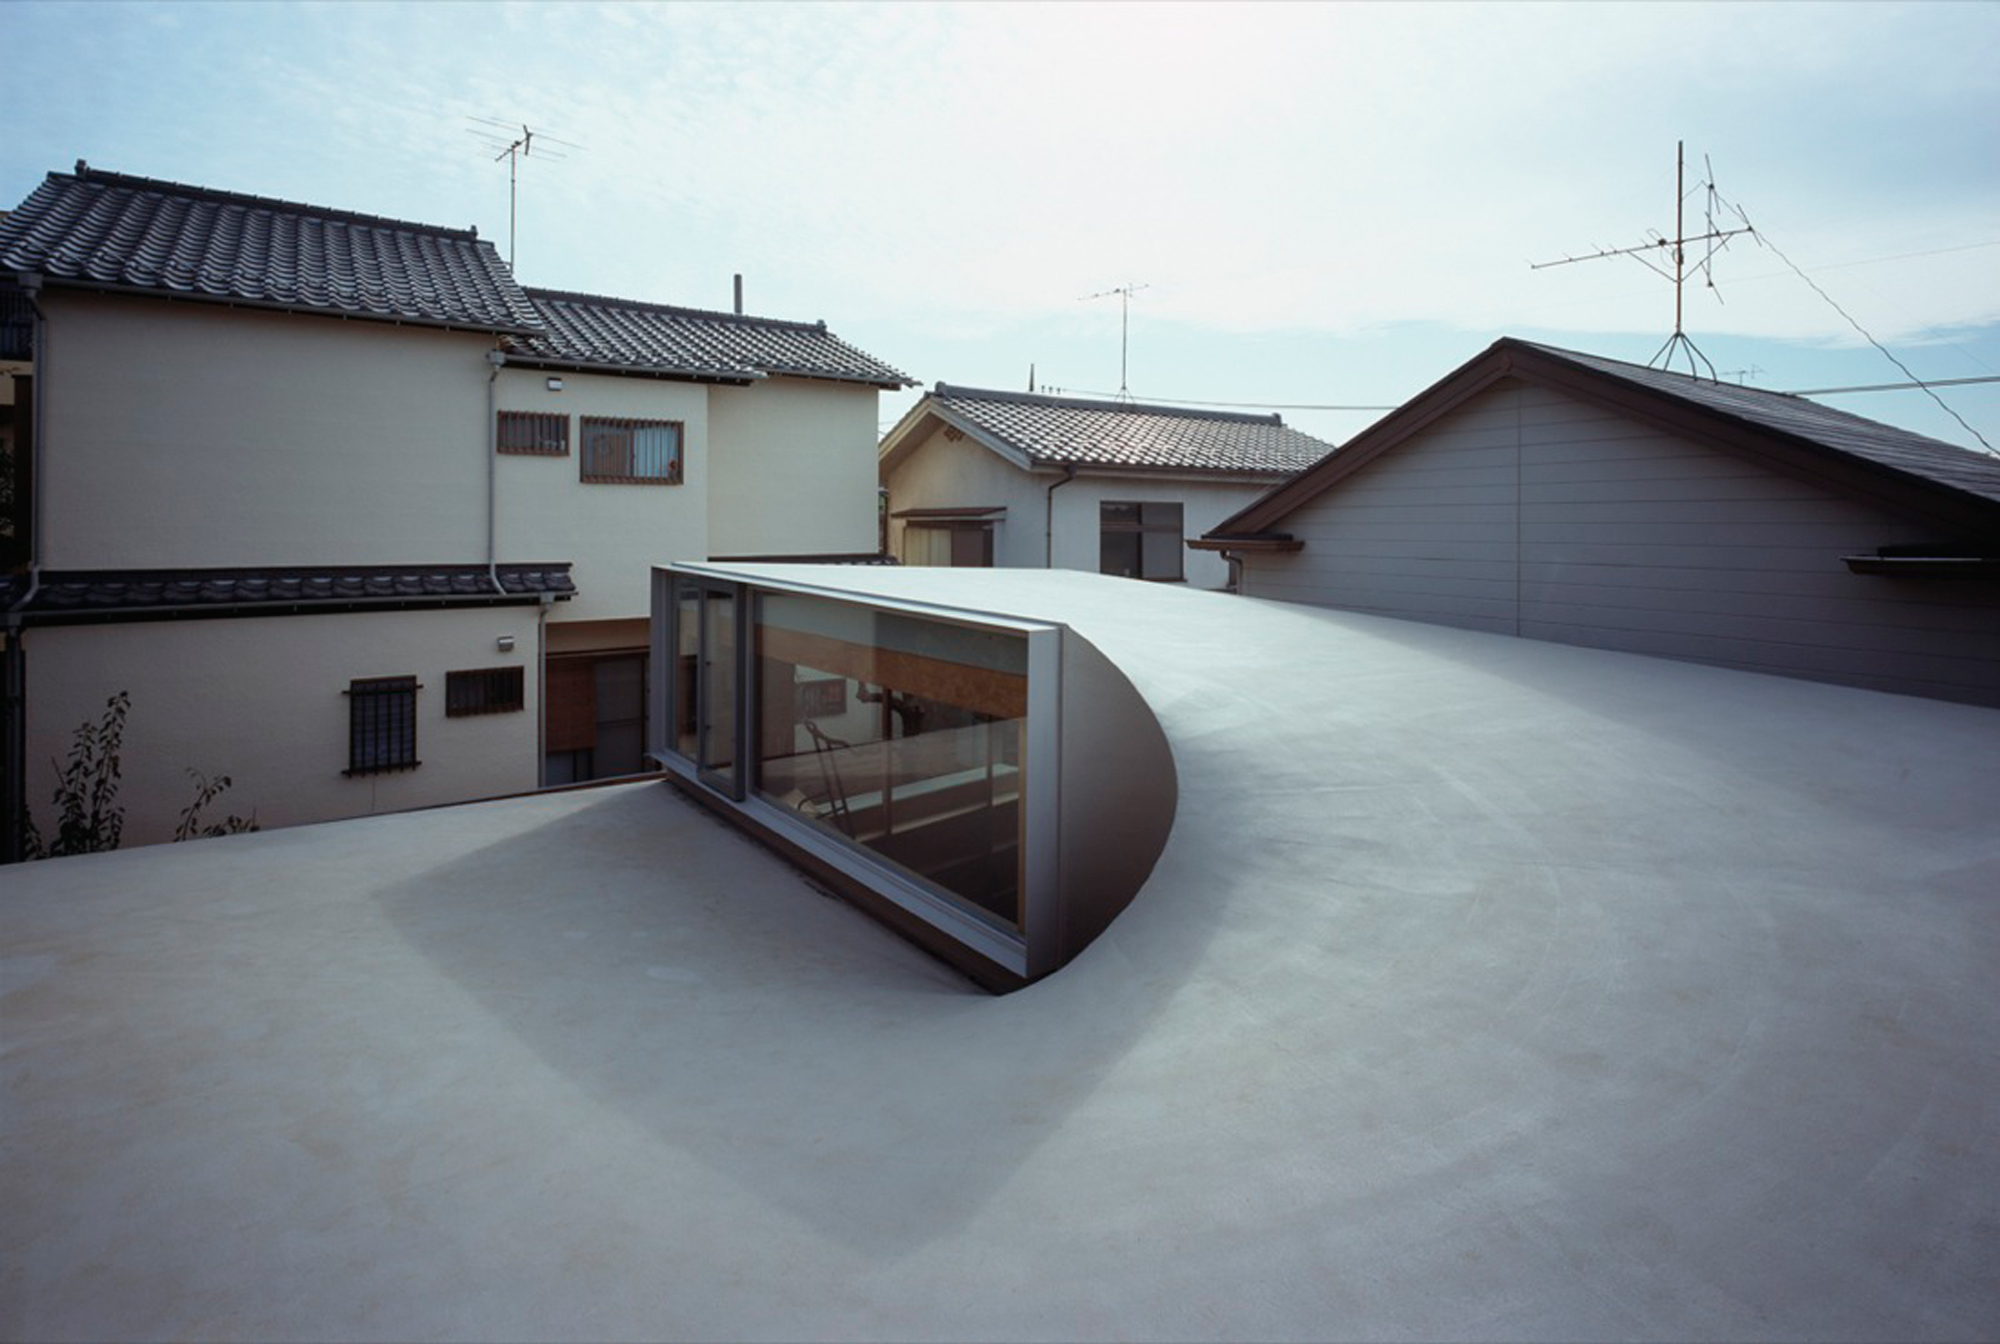 Tree House / Mount Fuji Architects Studio (28)